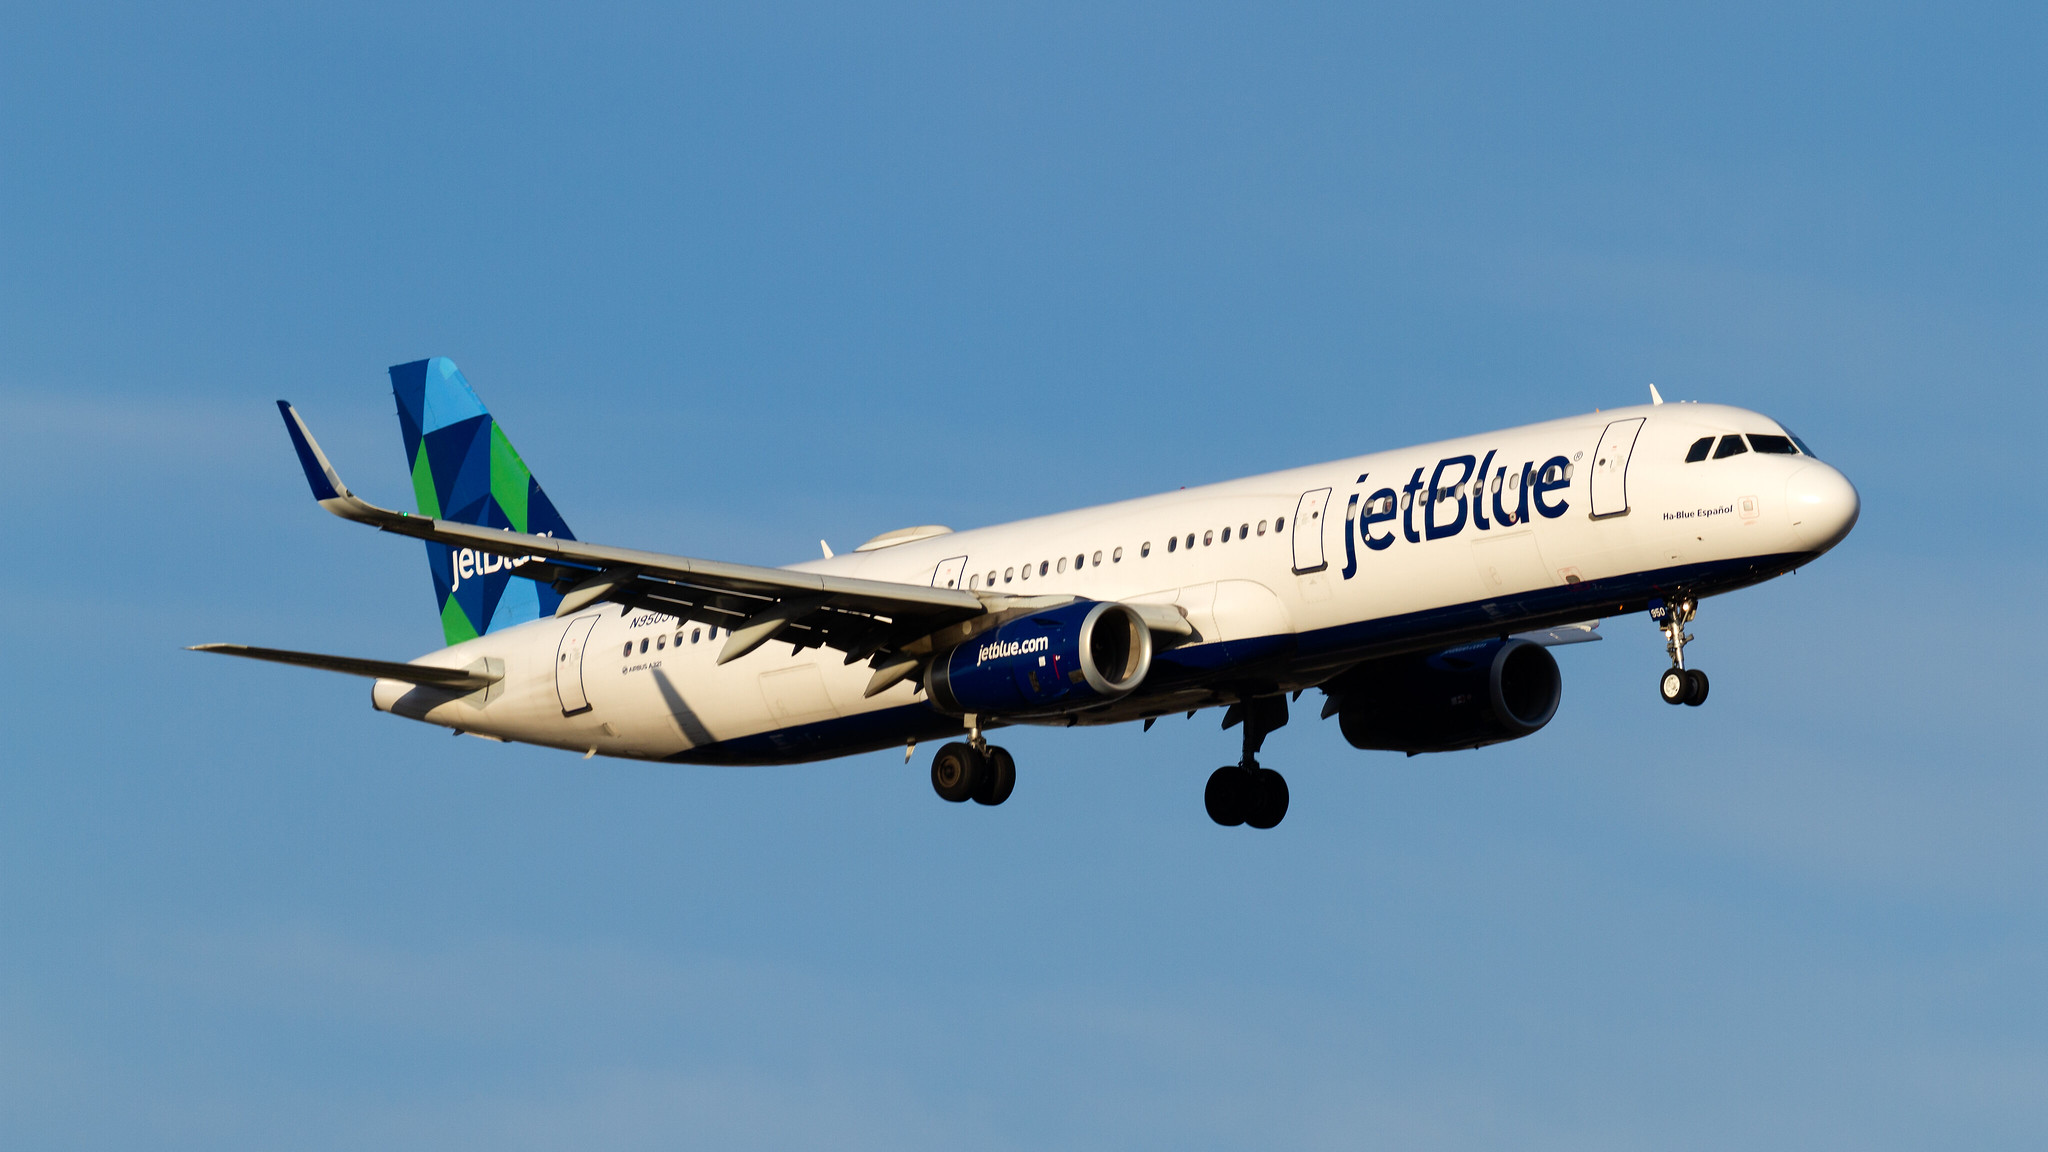 A JetBlue Airbus in flight.